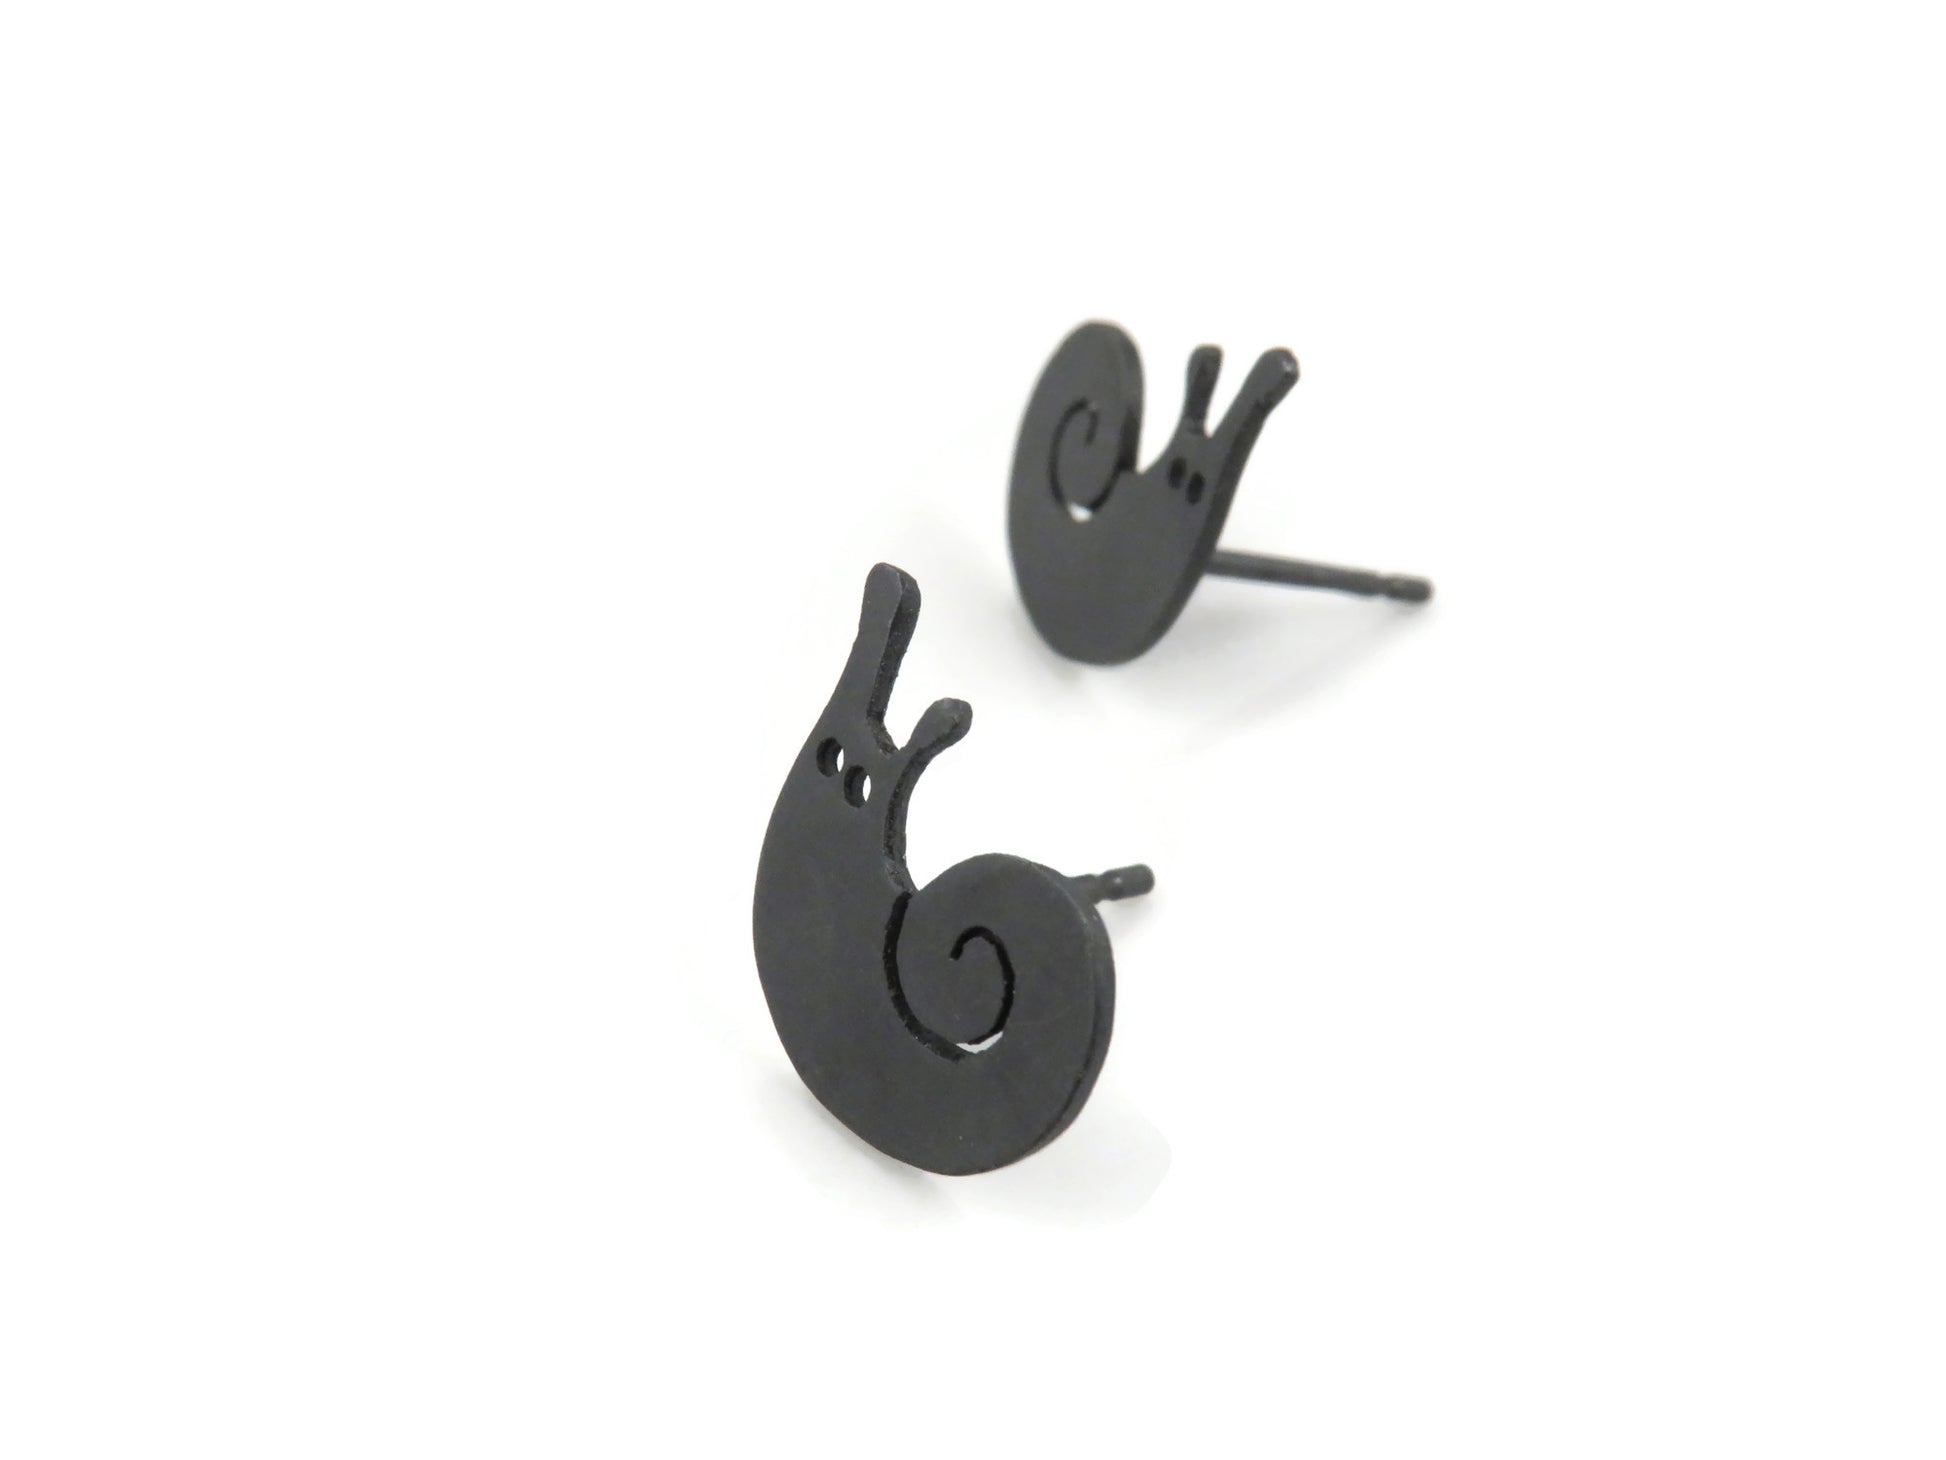 Tiny Snails Black Silver Stud Earrings